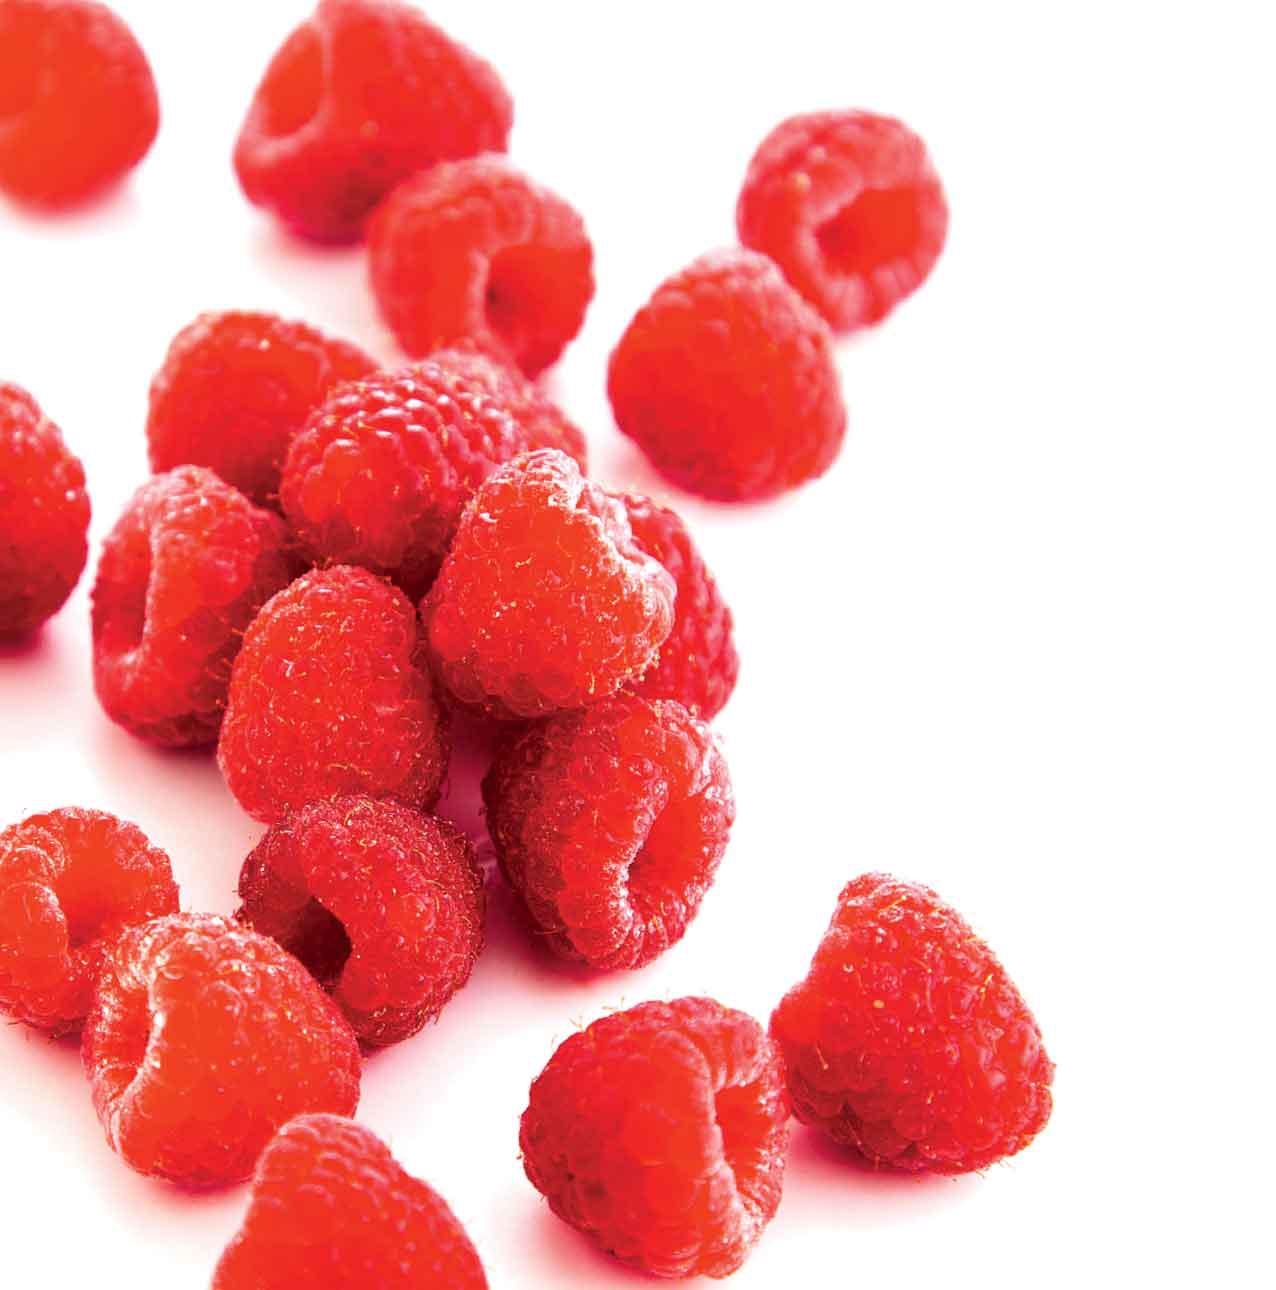 Raspberry recipes: Three ways to use summer berries